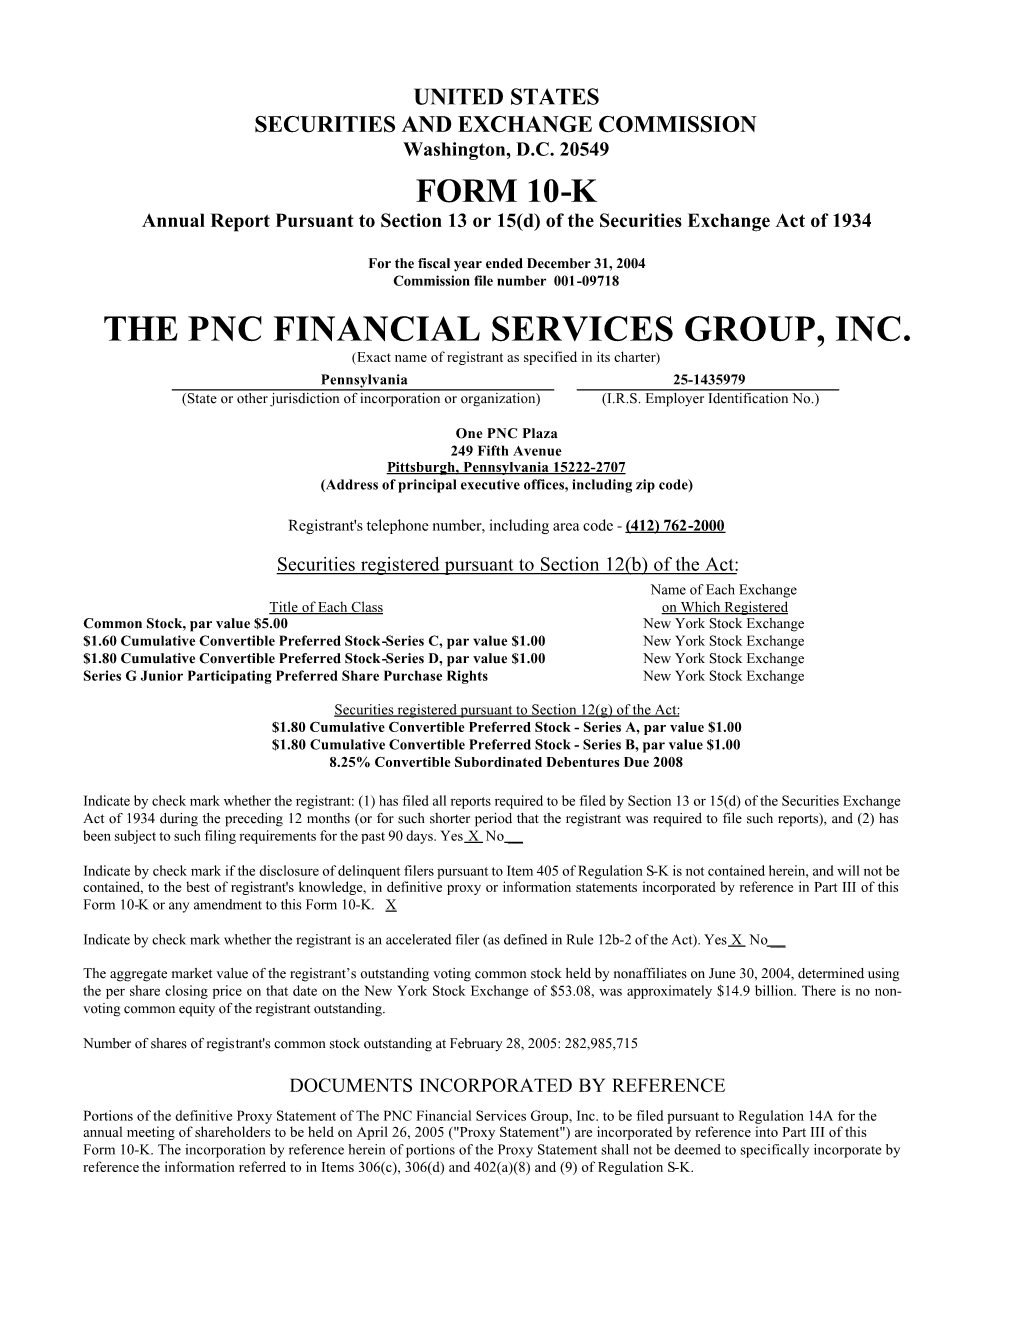 The Pnc Financial Services Group, Inc